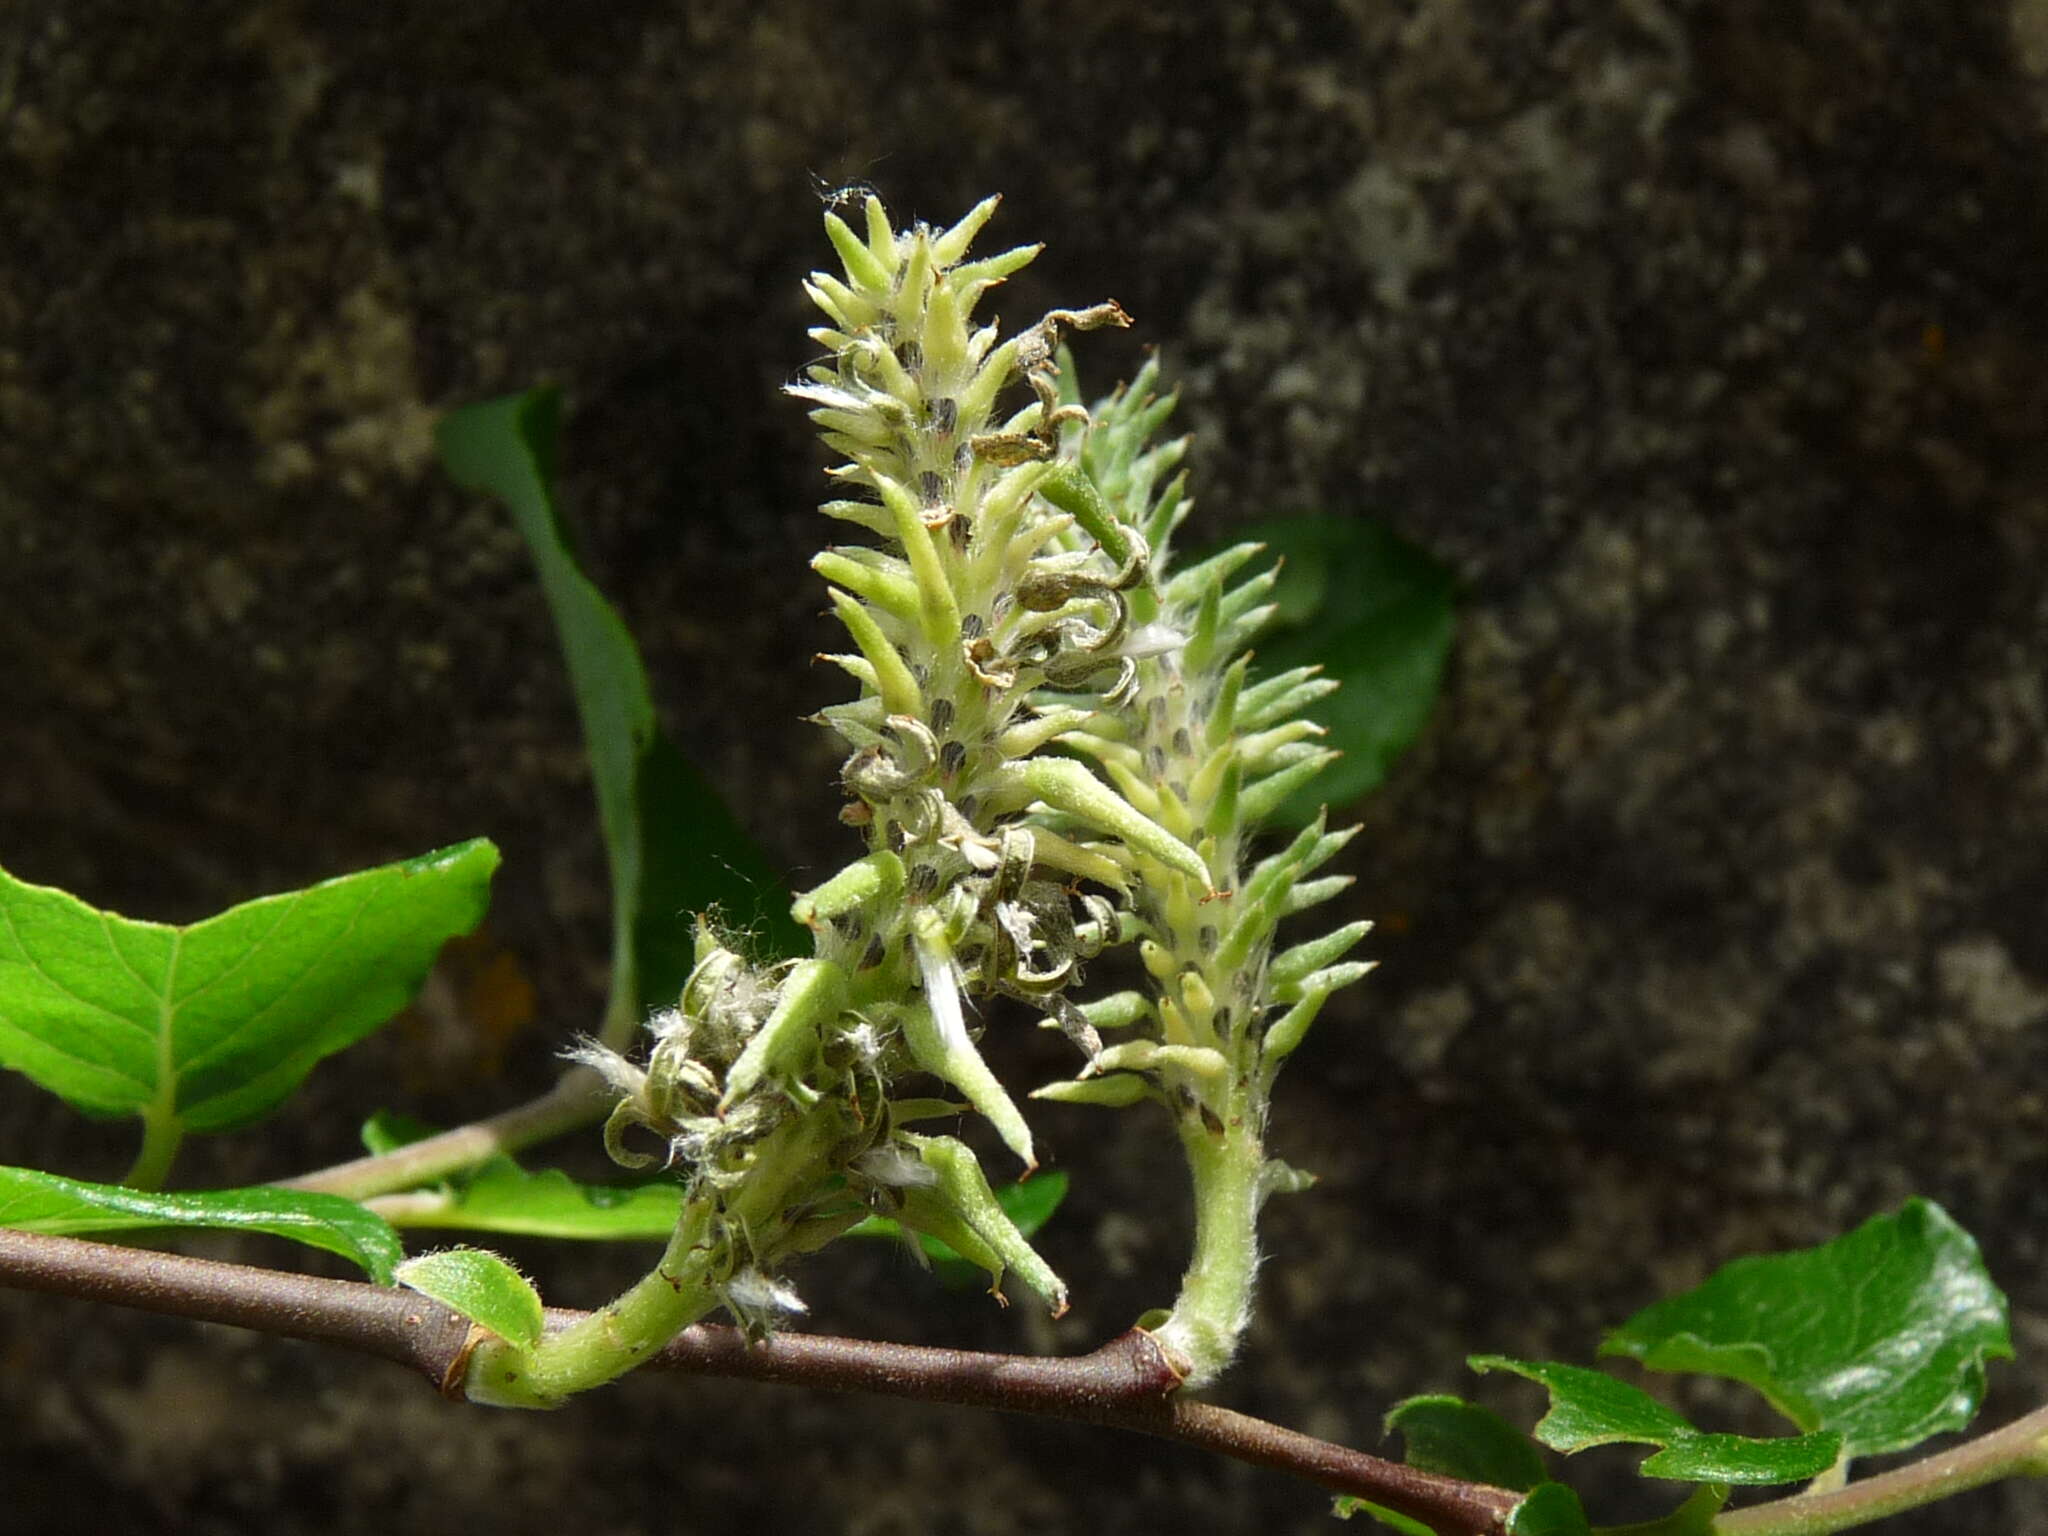 Image of Salix tarraconensis Pau